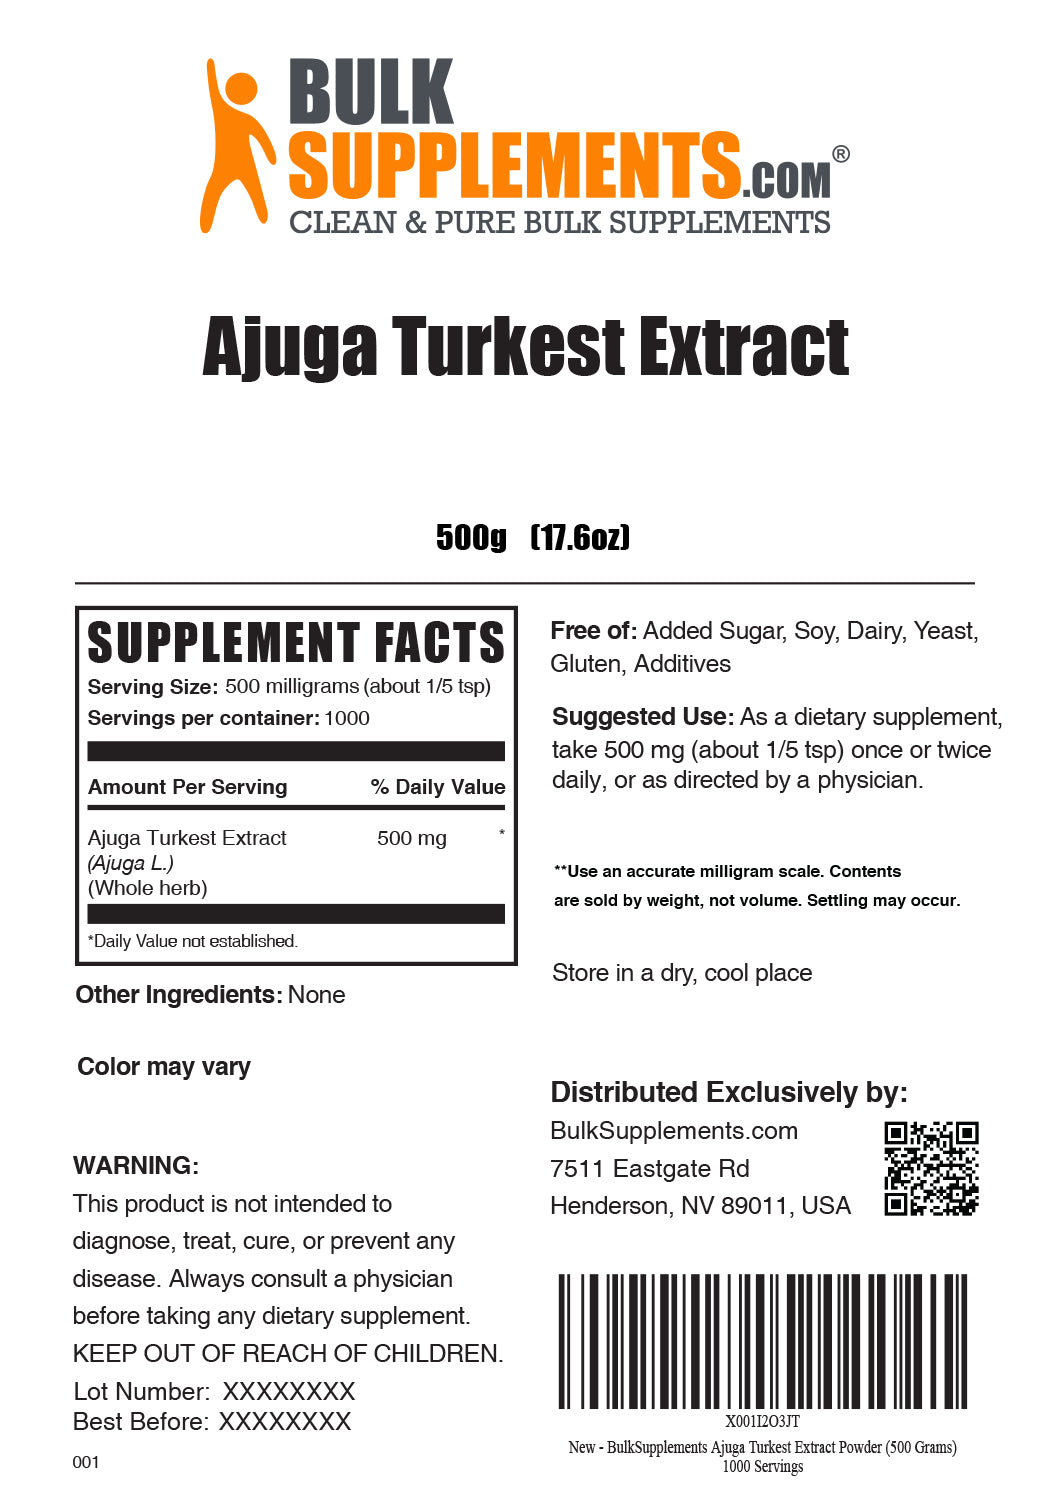 Ajuga Turkest Extract powder label 500g